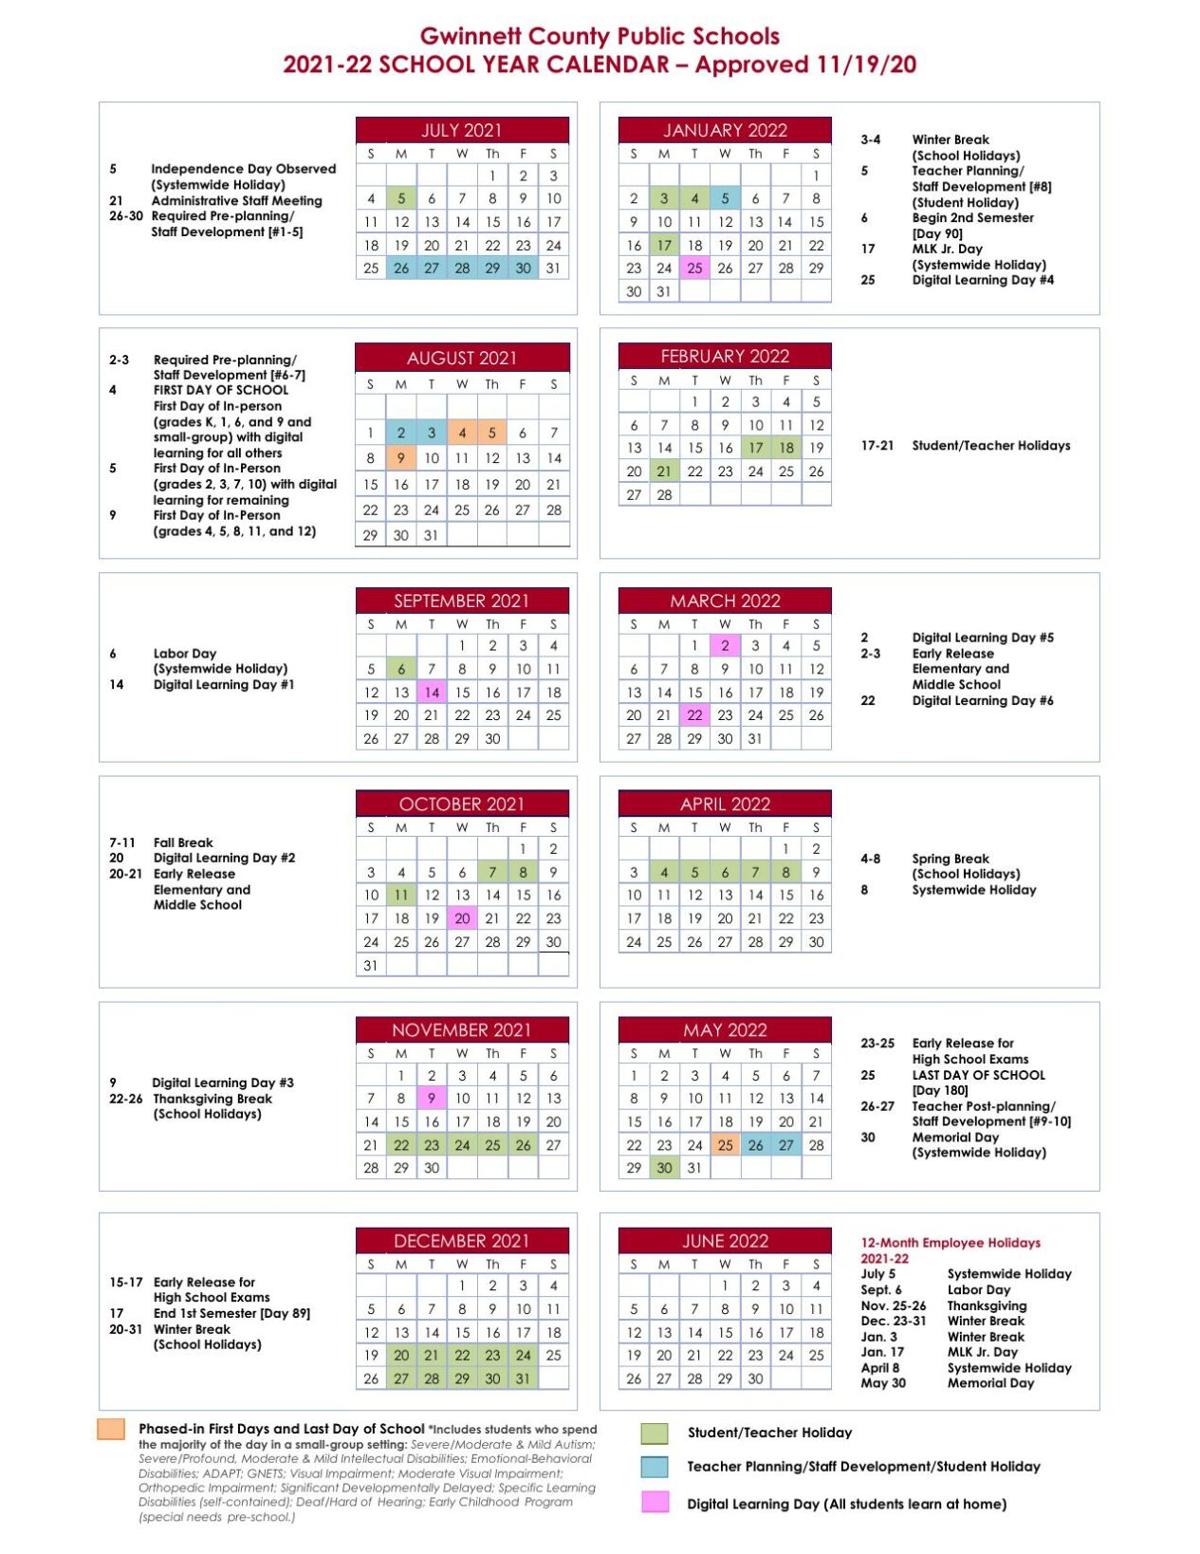 South Dakota State University Academic Calendar 2022 2023 Gwinnett County Public Schools' 2021-2022 School Year Calendar | |  Gwinnettdailypost.com